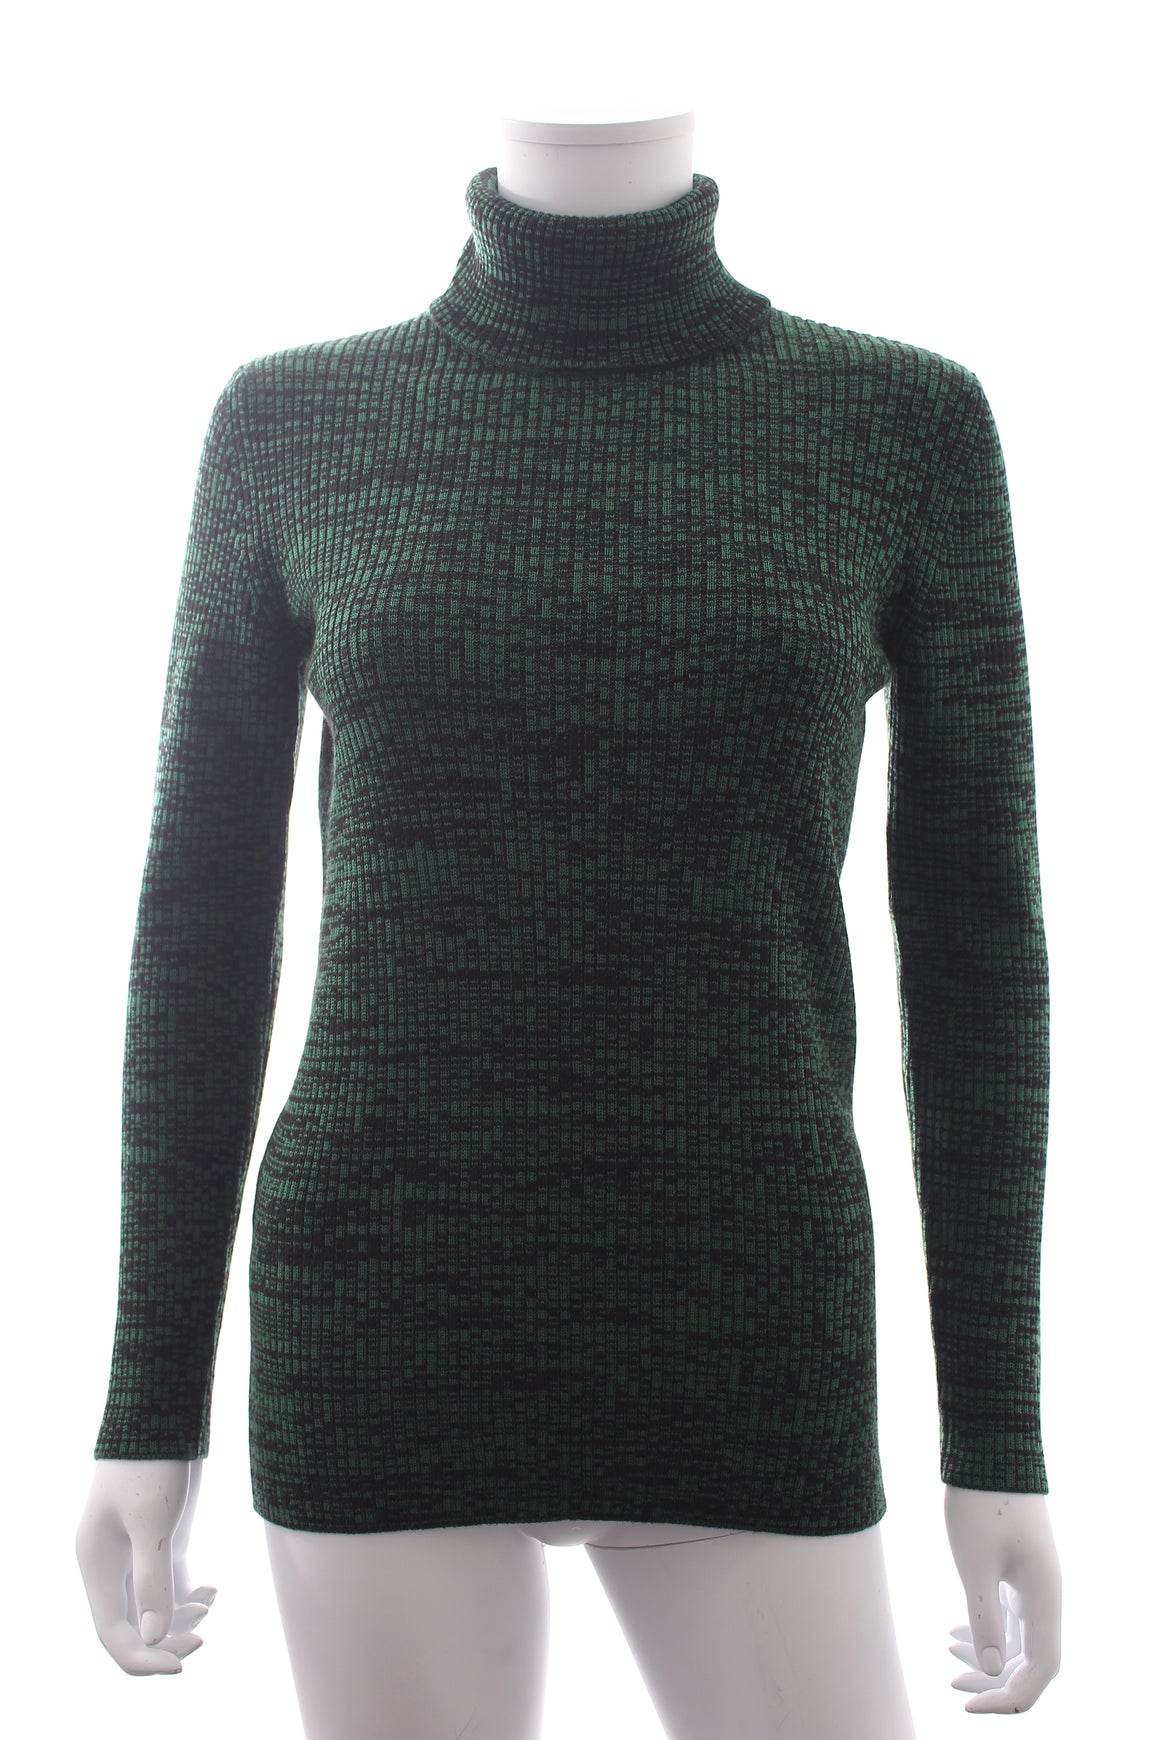 Miu Miu Ribbed Roll-Neck Wool Sweater